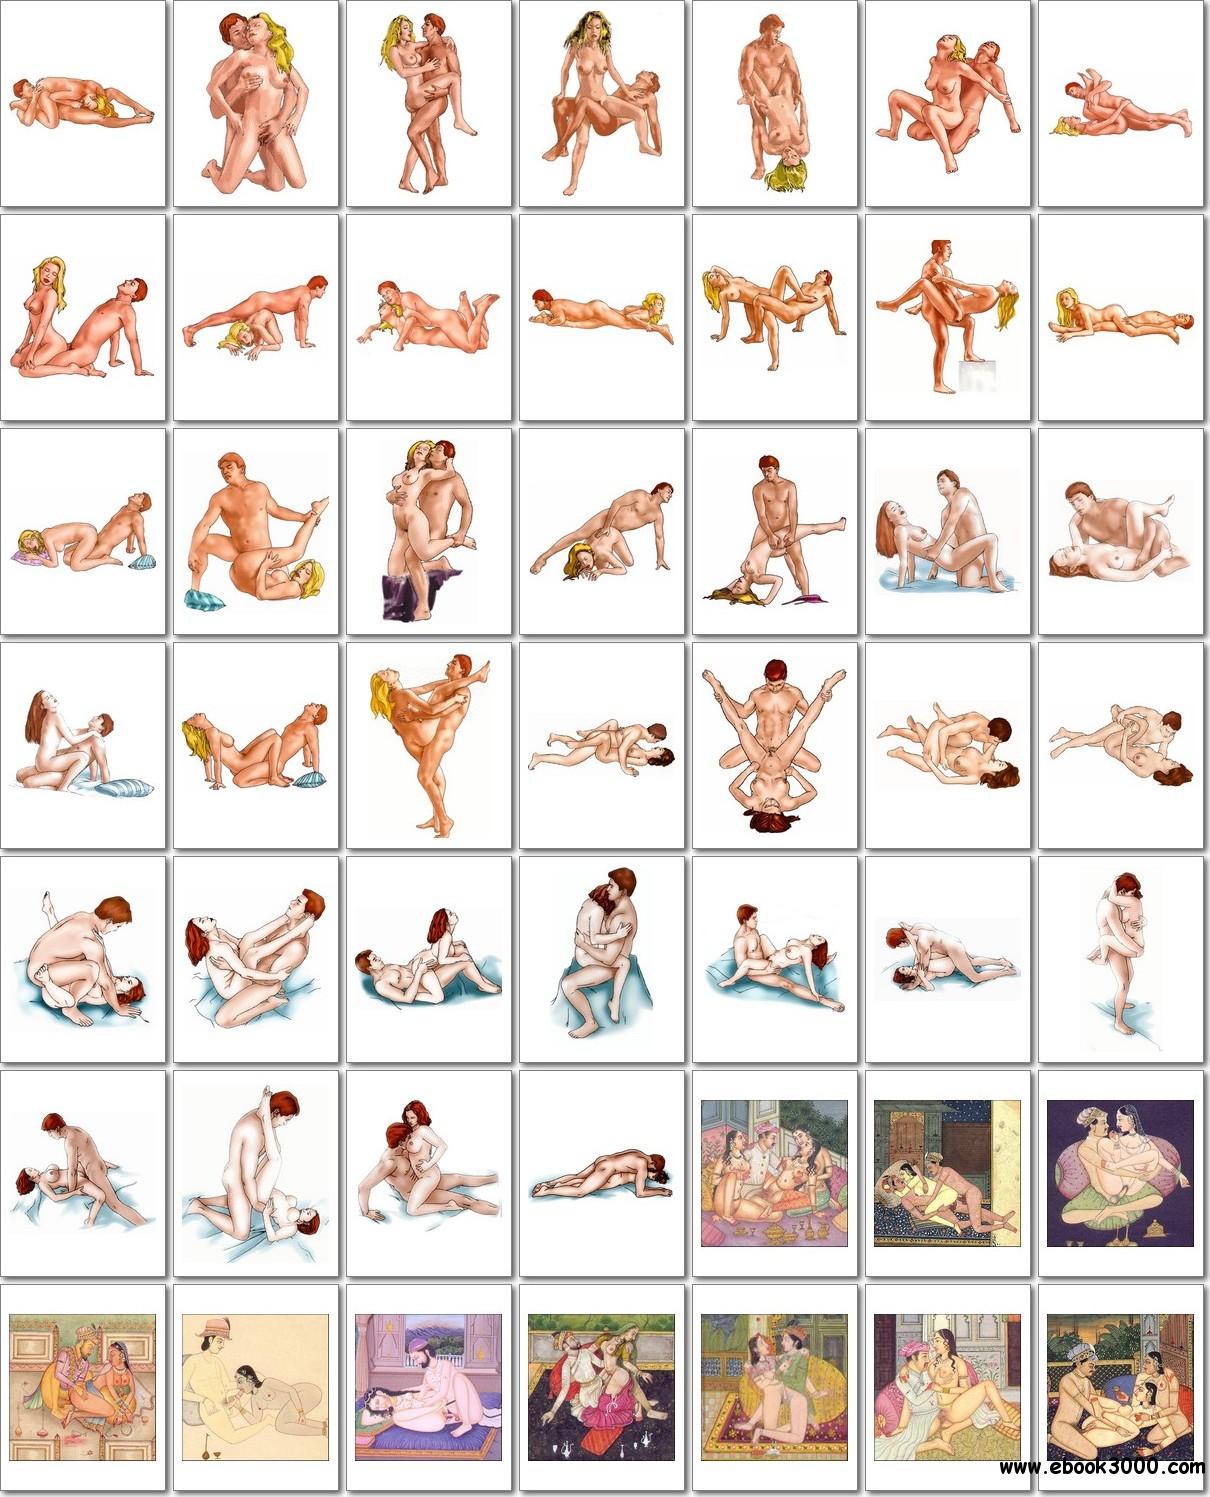 Free online sex position manuals - Sex archive